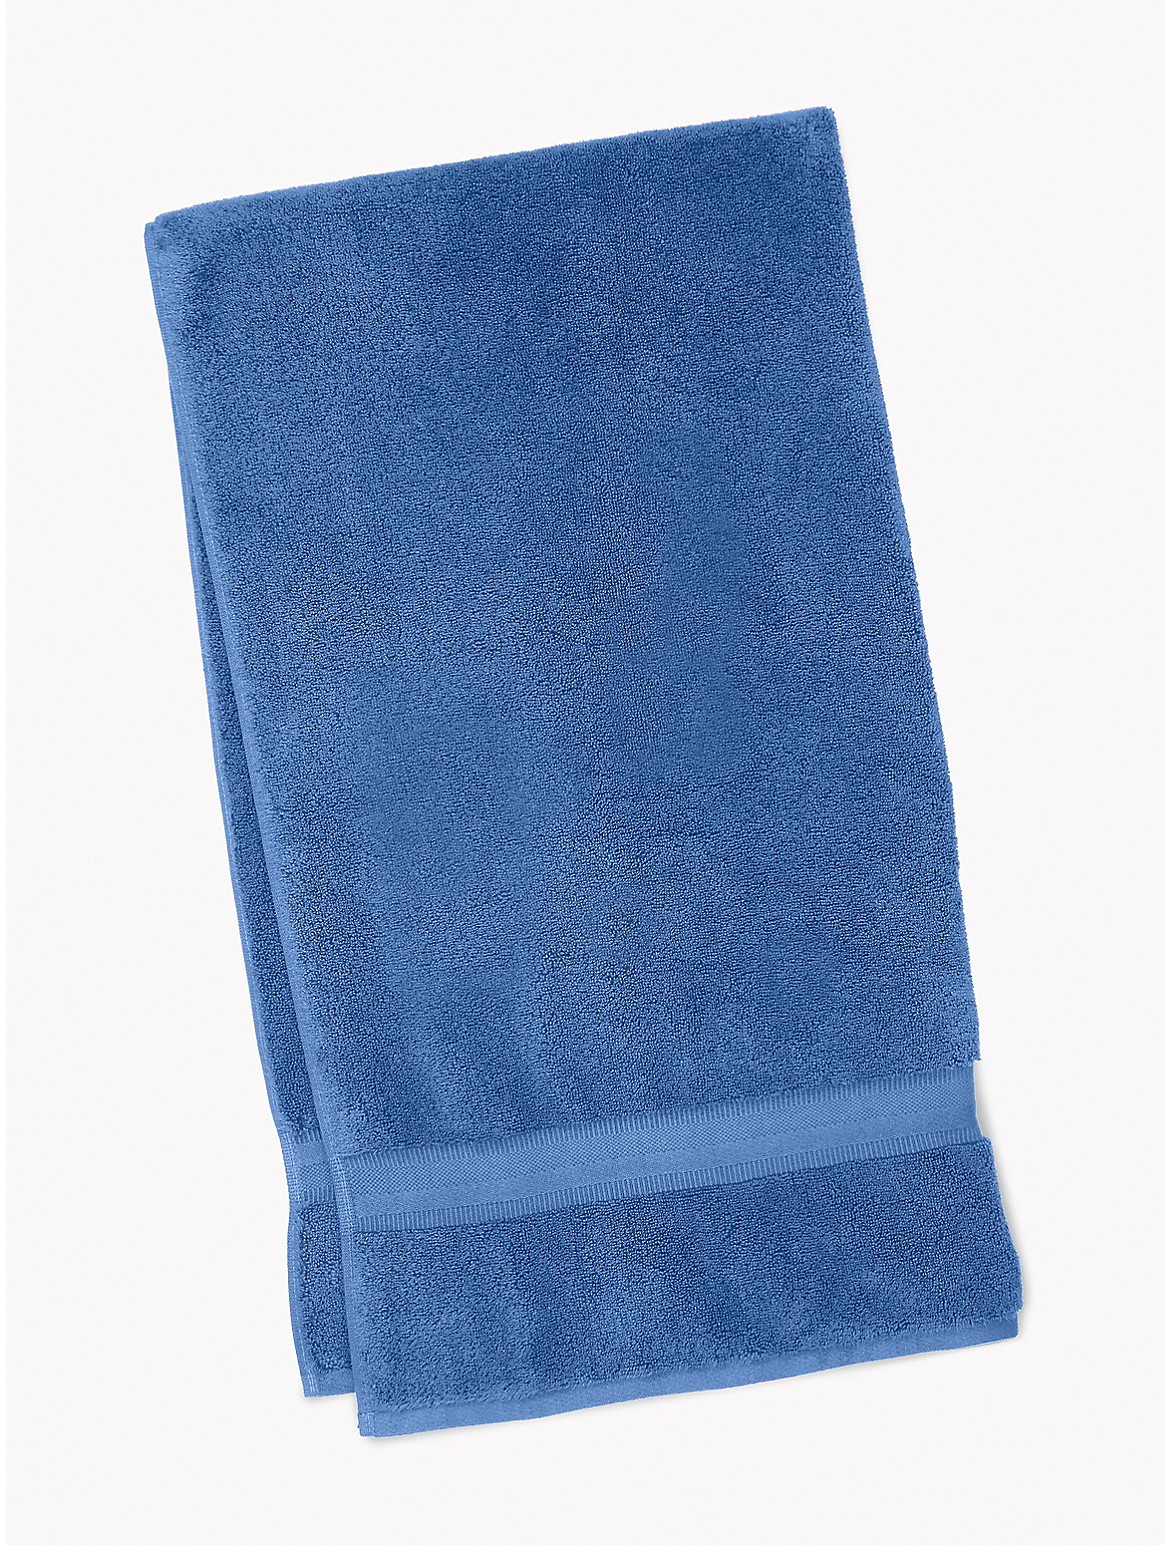 Tommy Hilfiger Signature Solid Bath Towel in Vintage Indigo - Blue